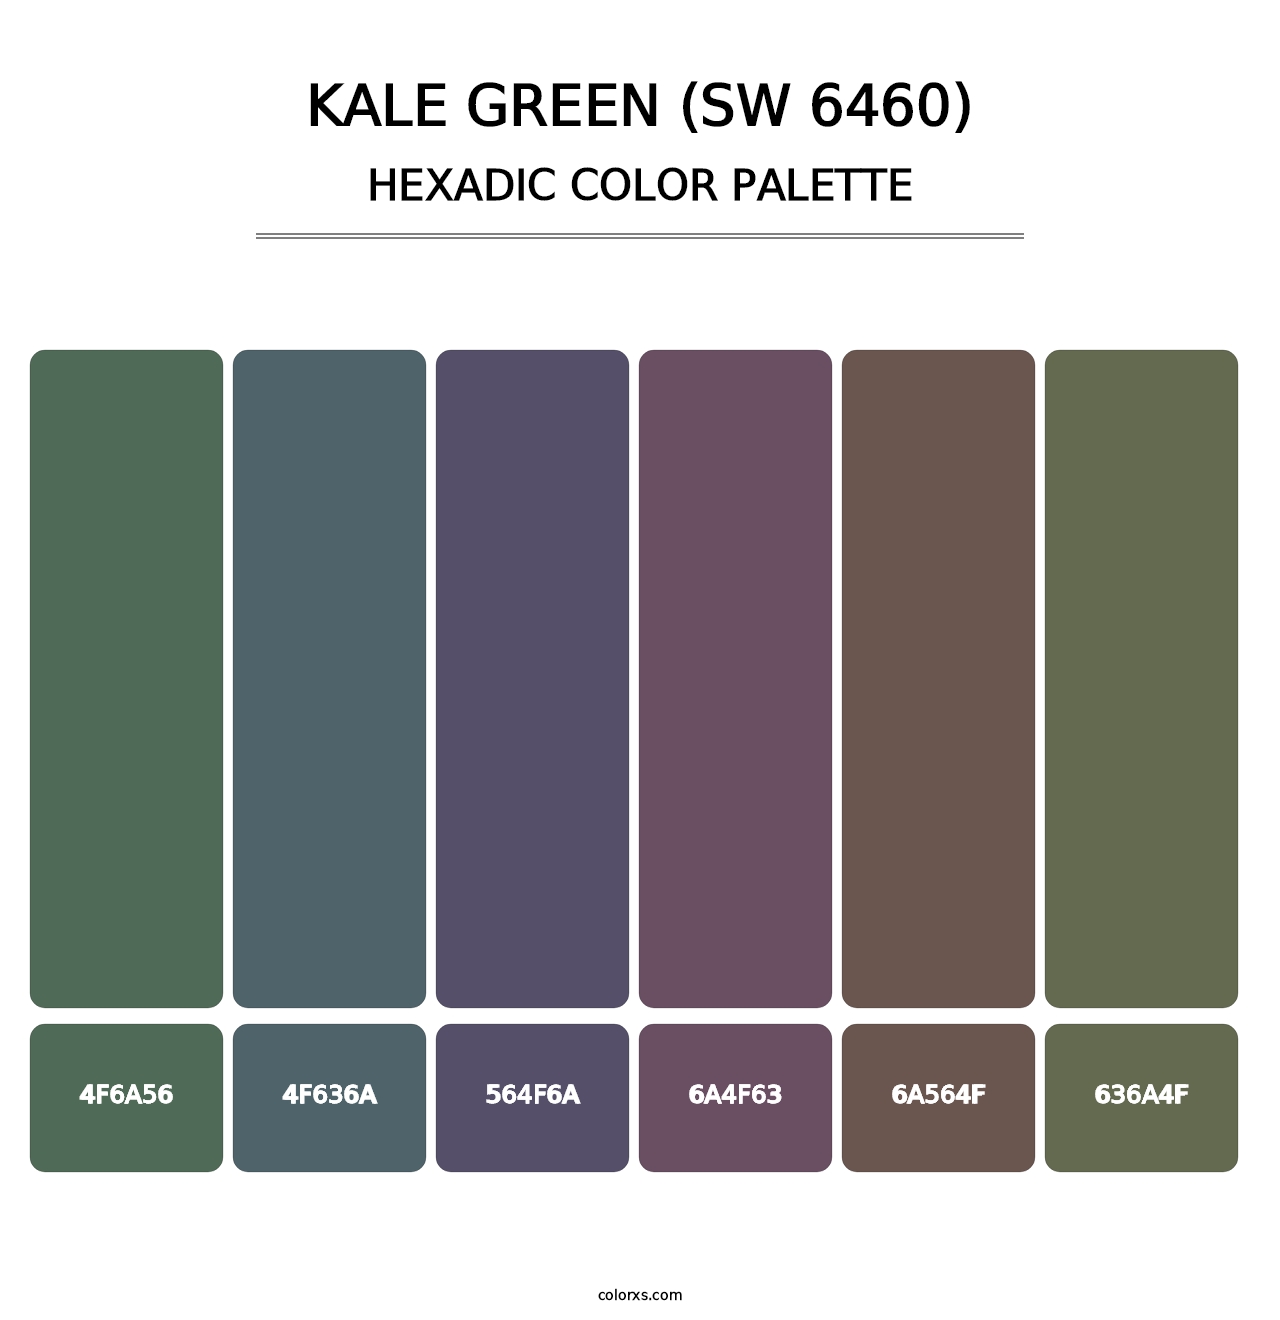 Kale Green (SW 6460) - Hexadic Color Palette